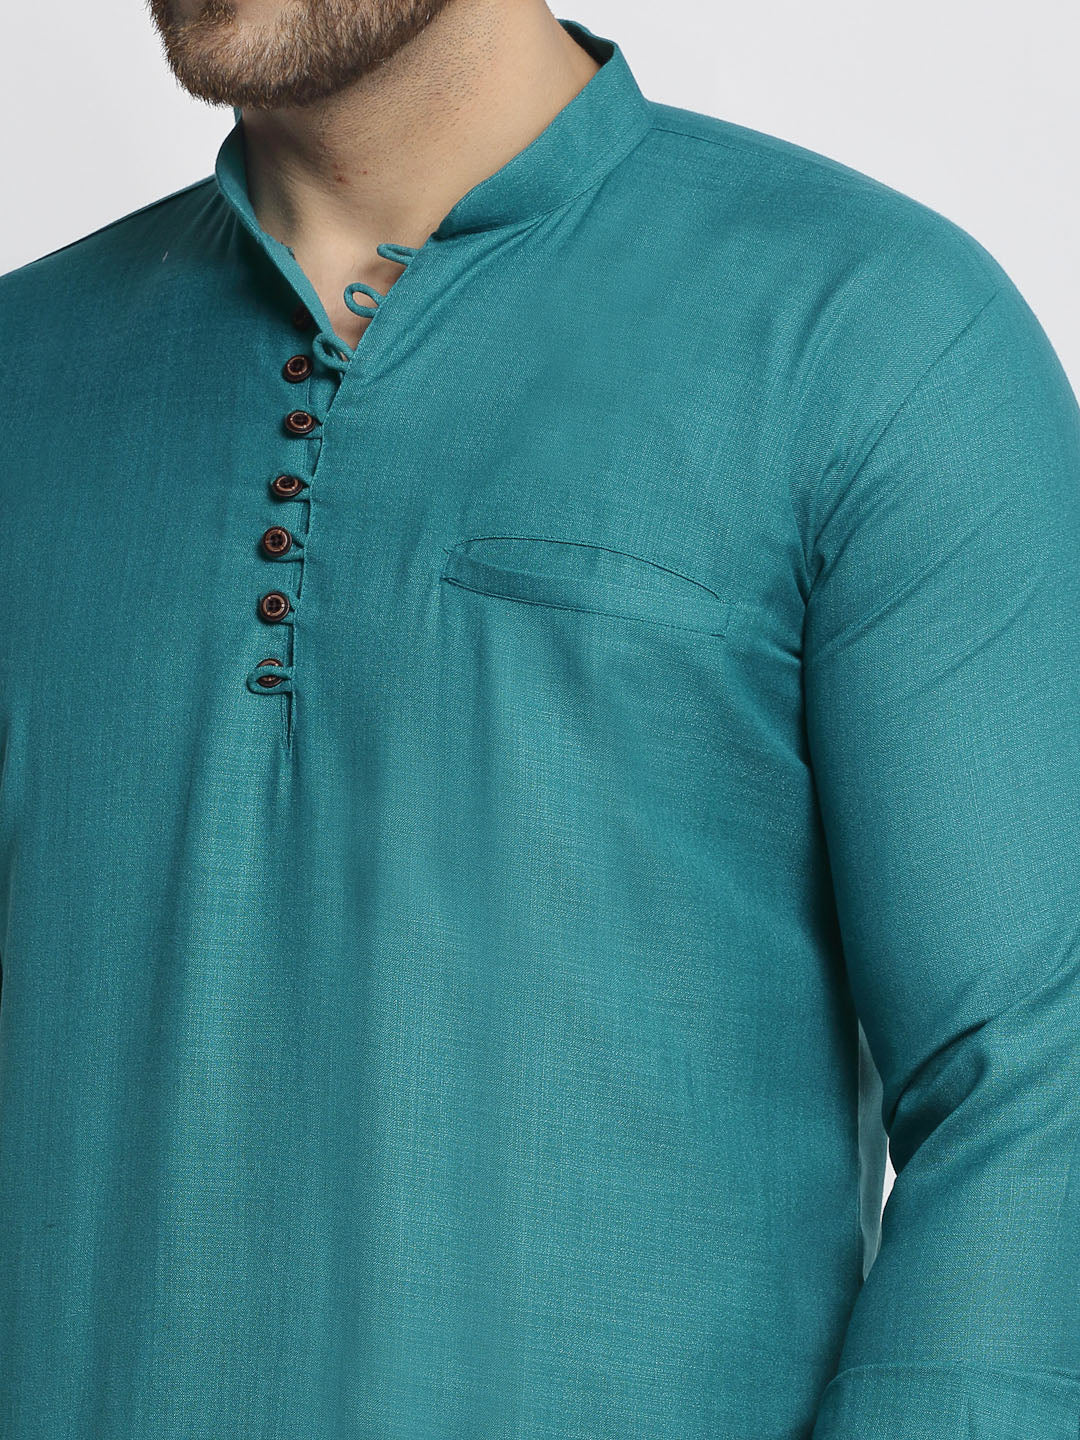 Men's Green Solid Cotton Short Kurta ( Ko 639 Green ) - Virat Fashions